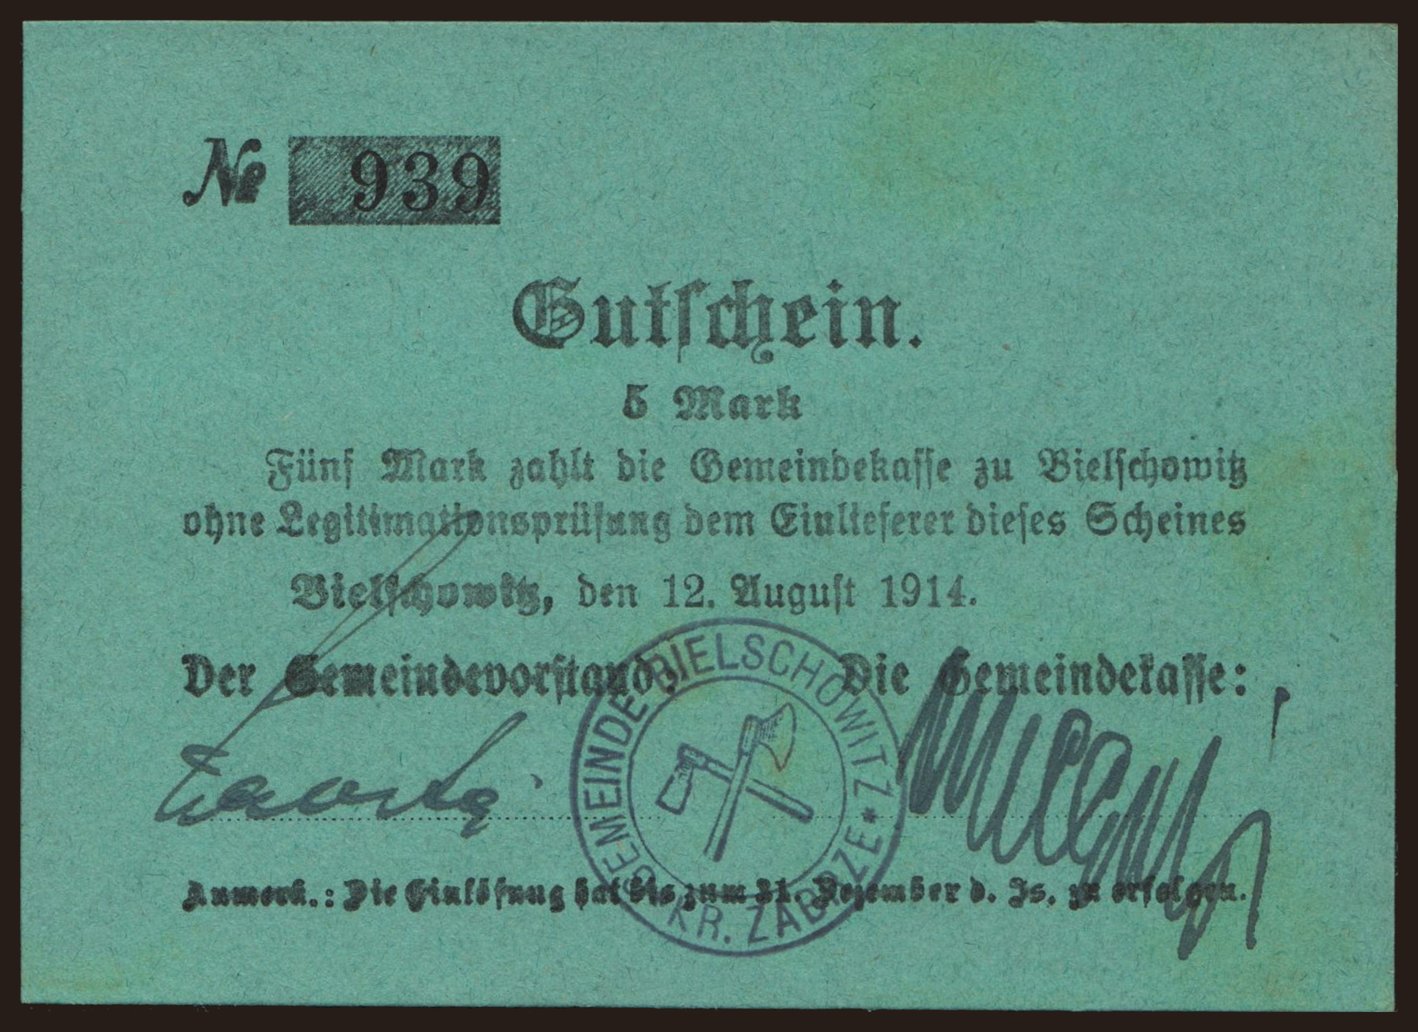 Bielschowitz (Ruda Śląska)/ Gemeindekasse, 5 Mark, 1914